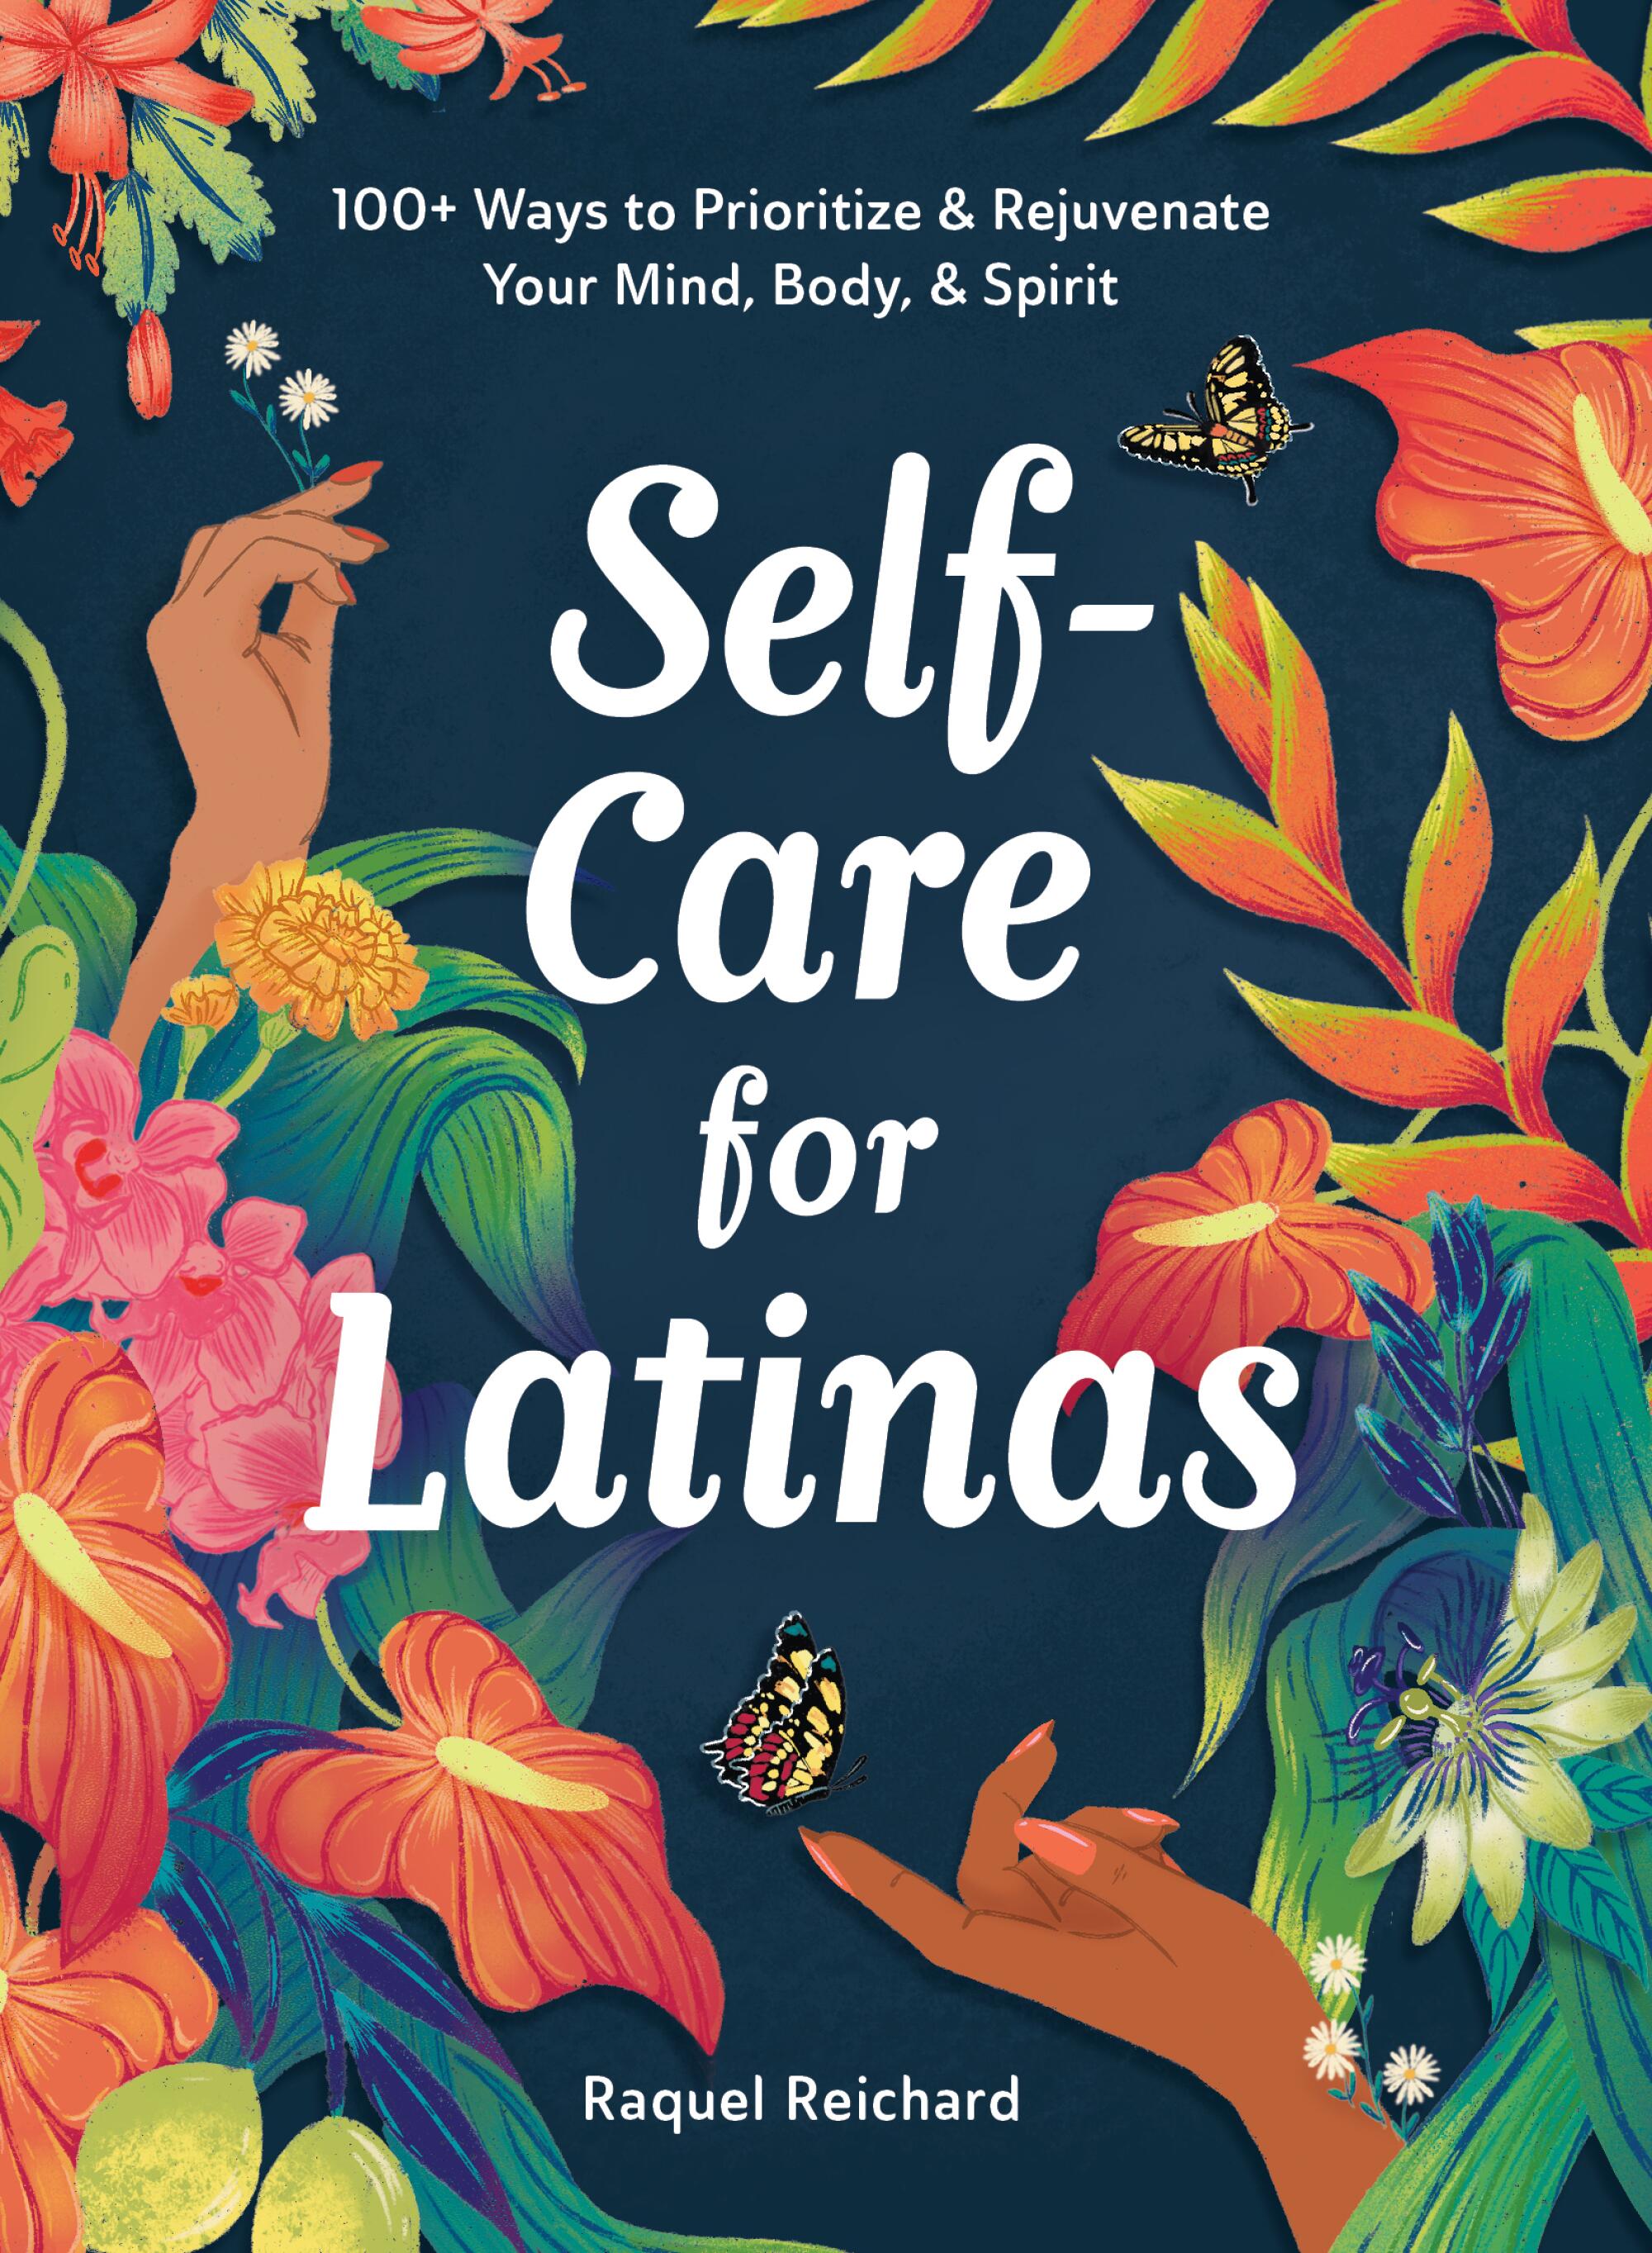 Self-Care for Latinas 

By Raquel Reichard